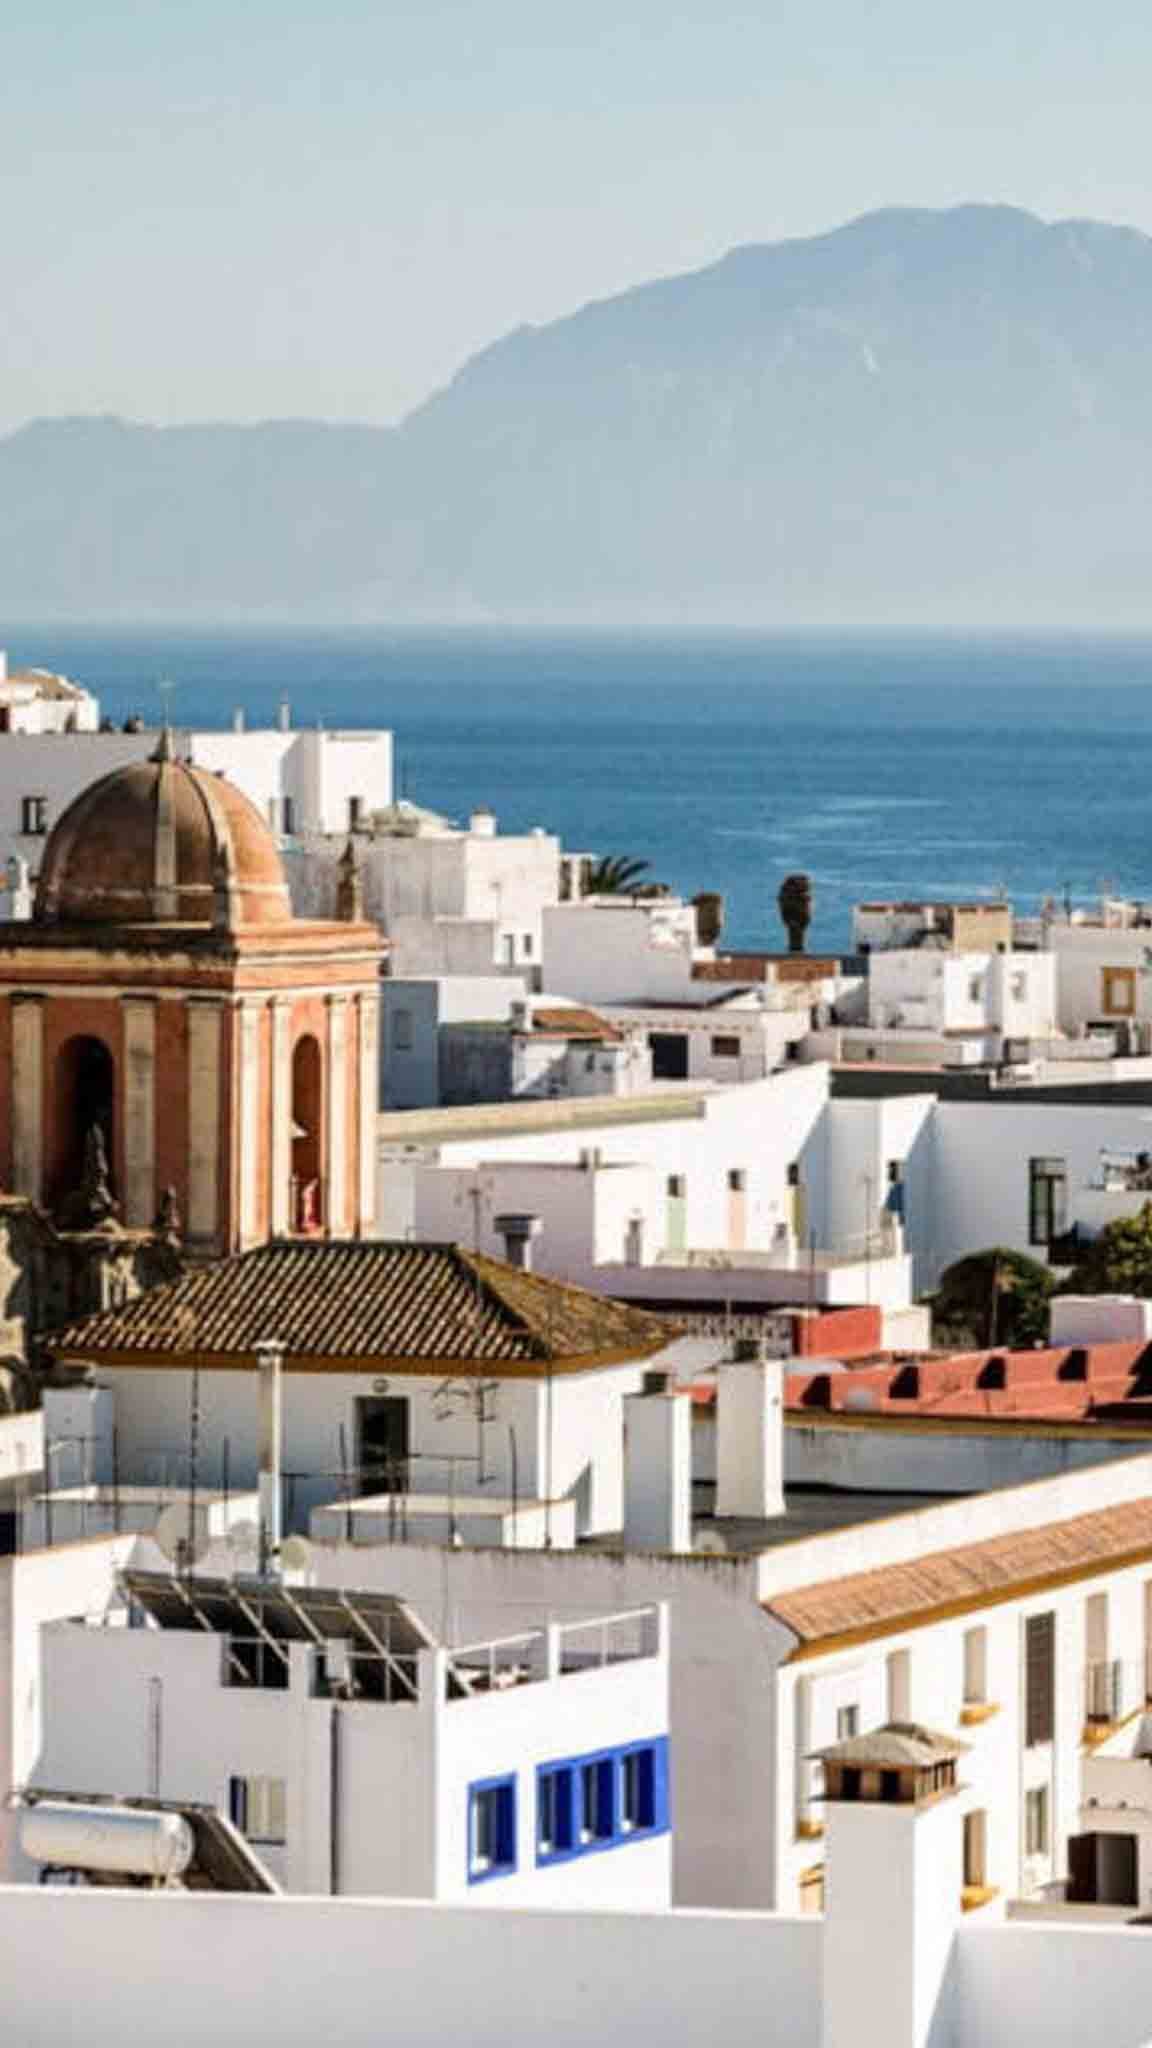 Tarifa Spain - The Best Beach Towns in Southern Spain - Stunning Beach Towns in Spain - The Wildest Road Blog.jpg